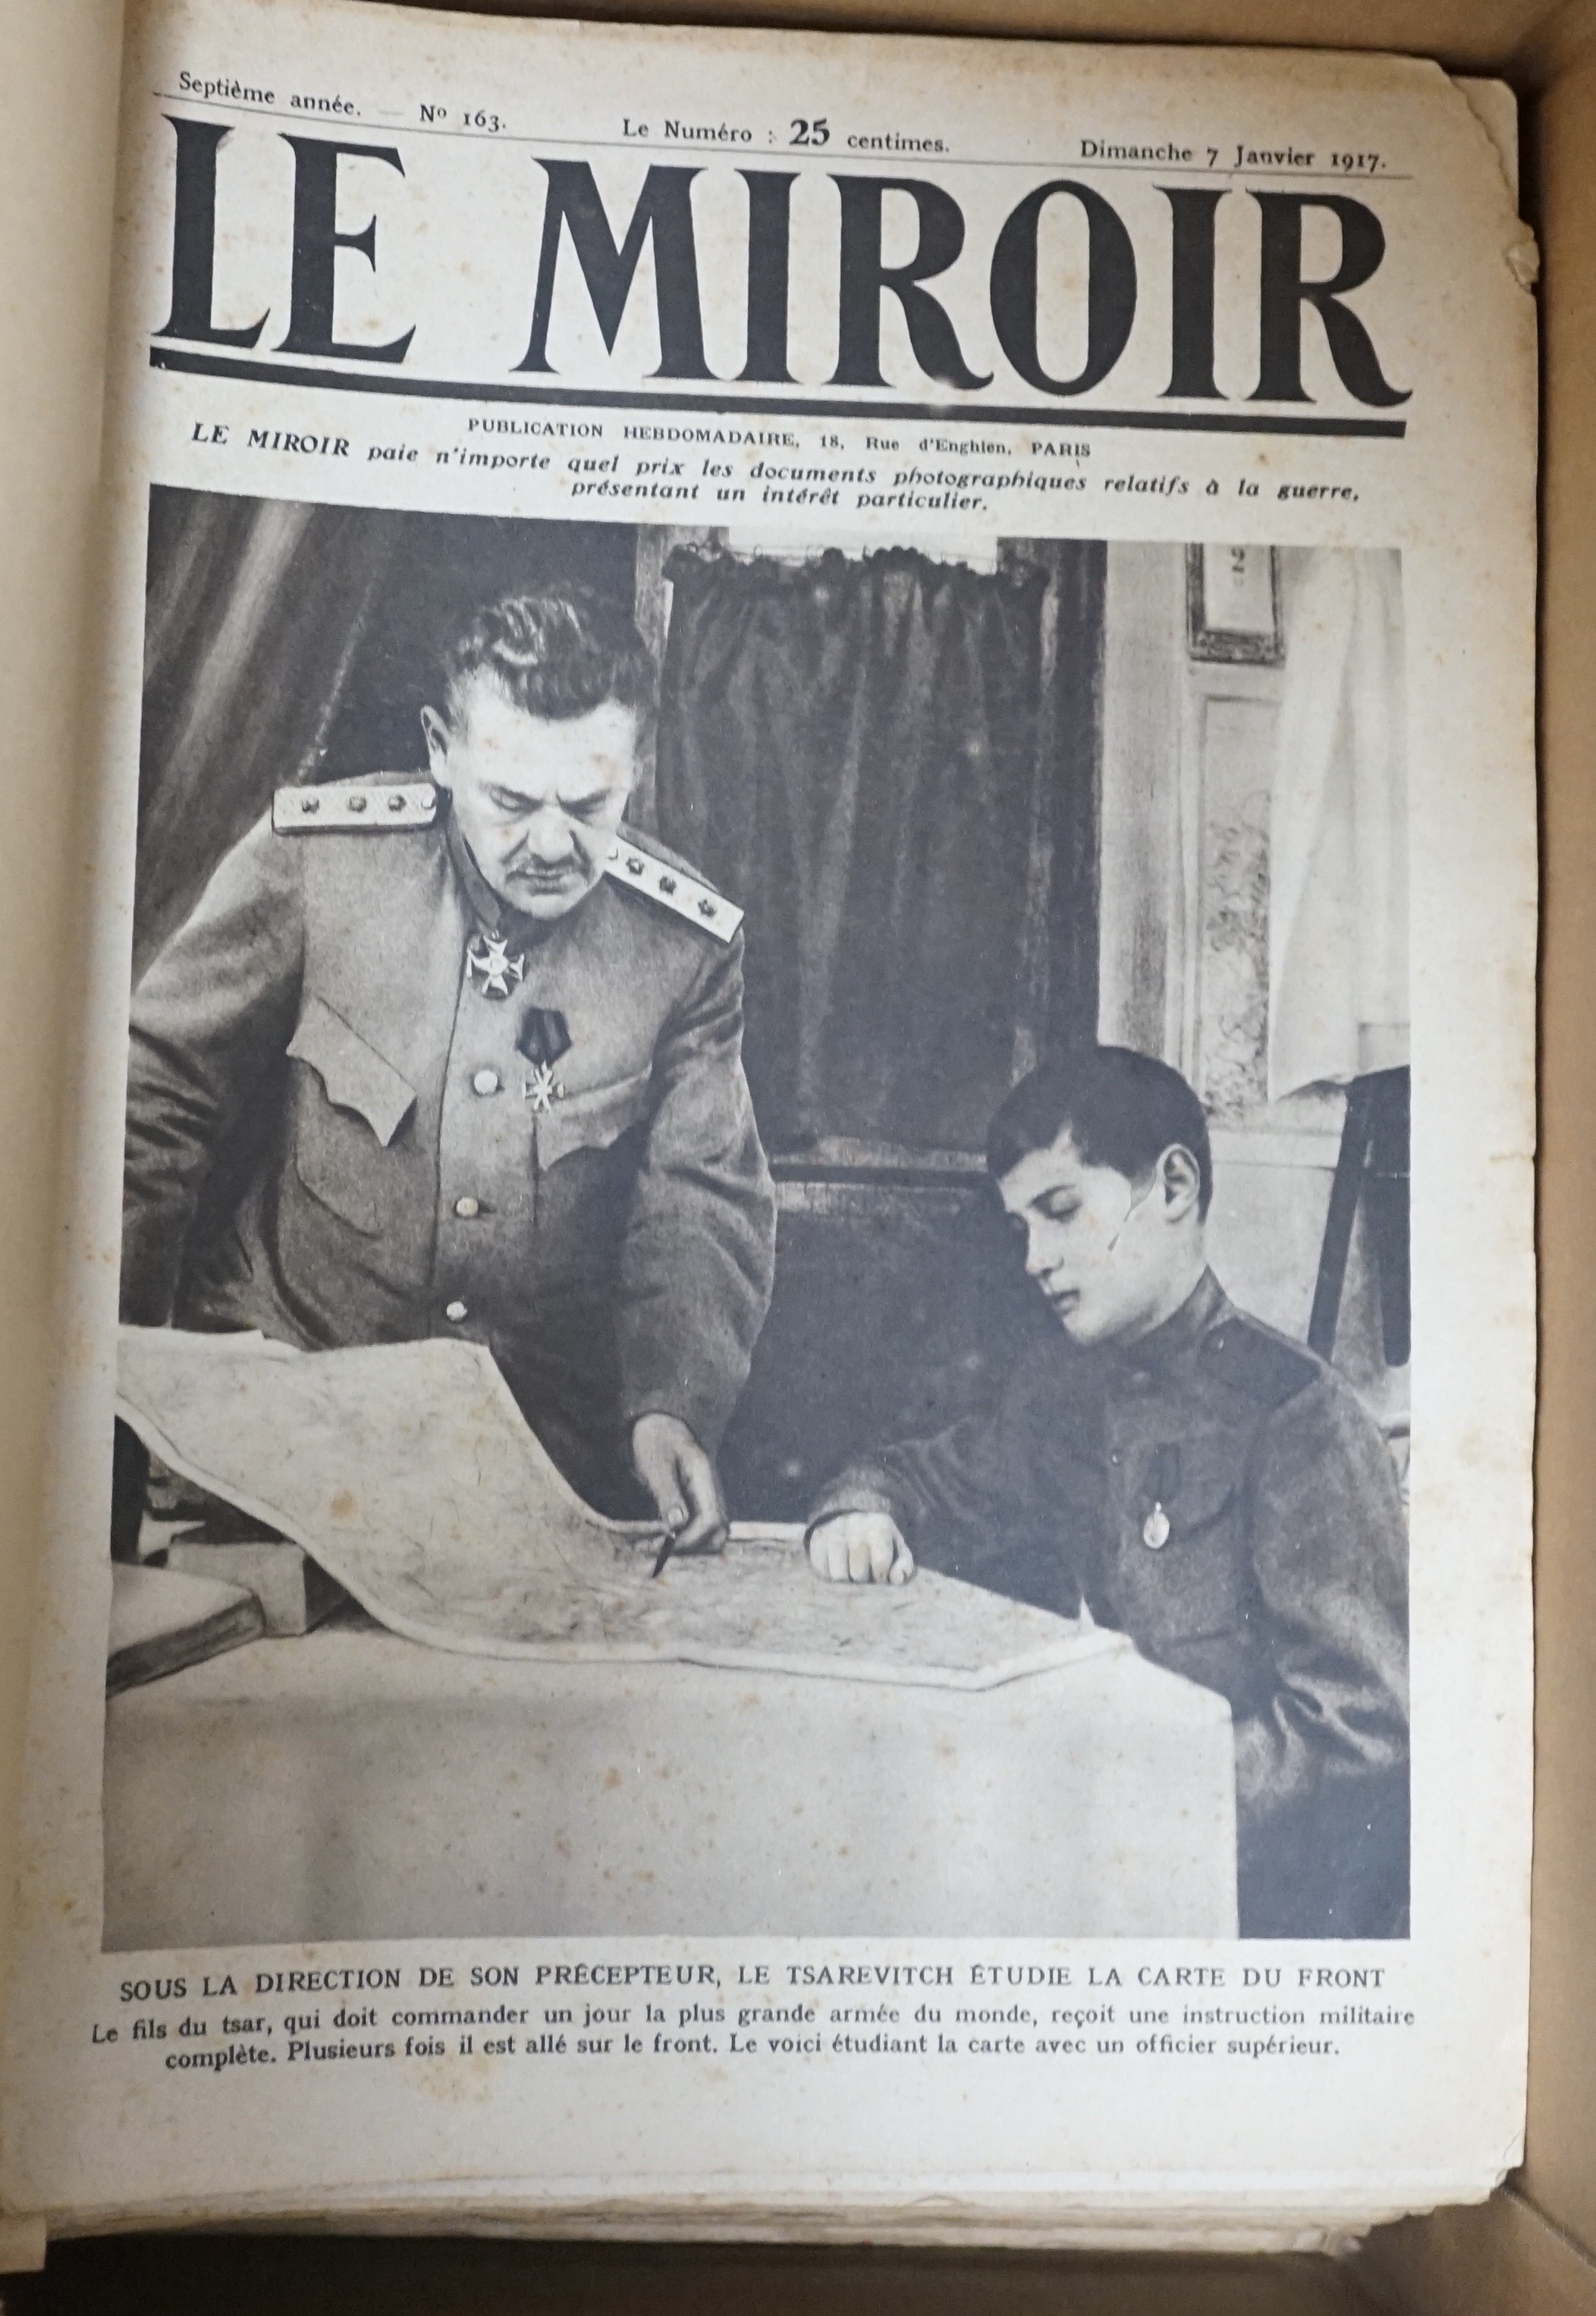 1916-1917 Le Miroir, Bound Publications, First World War etc.